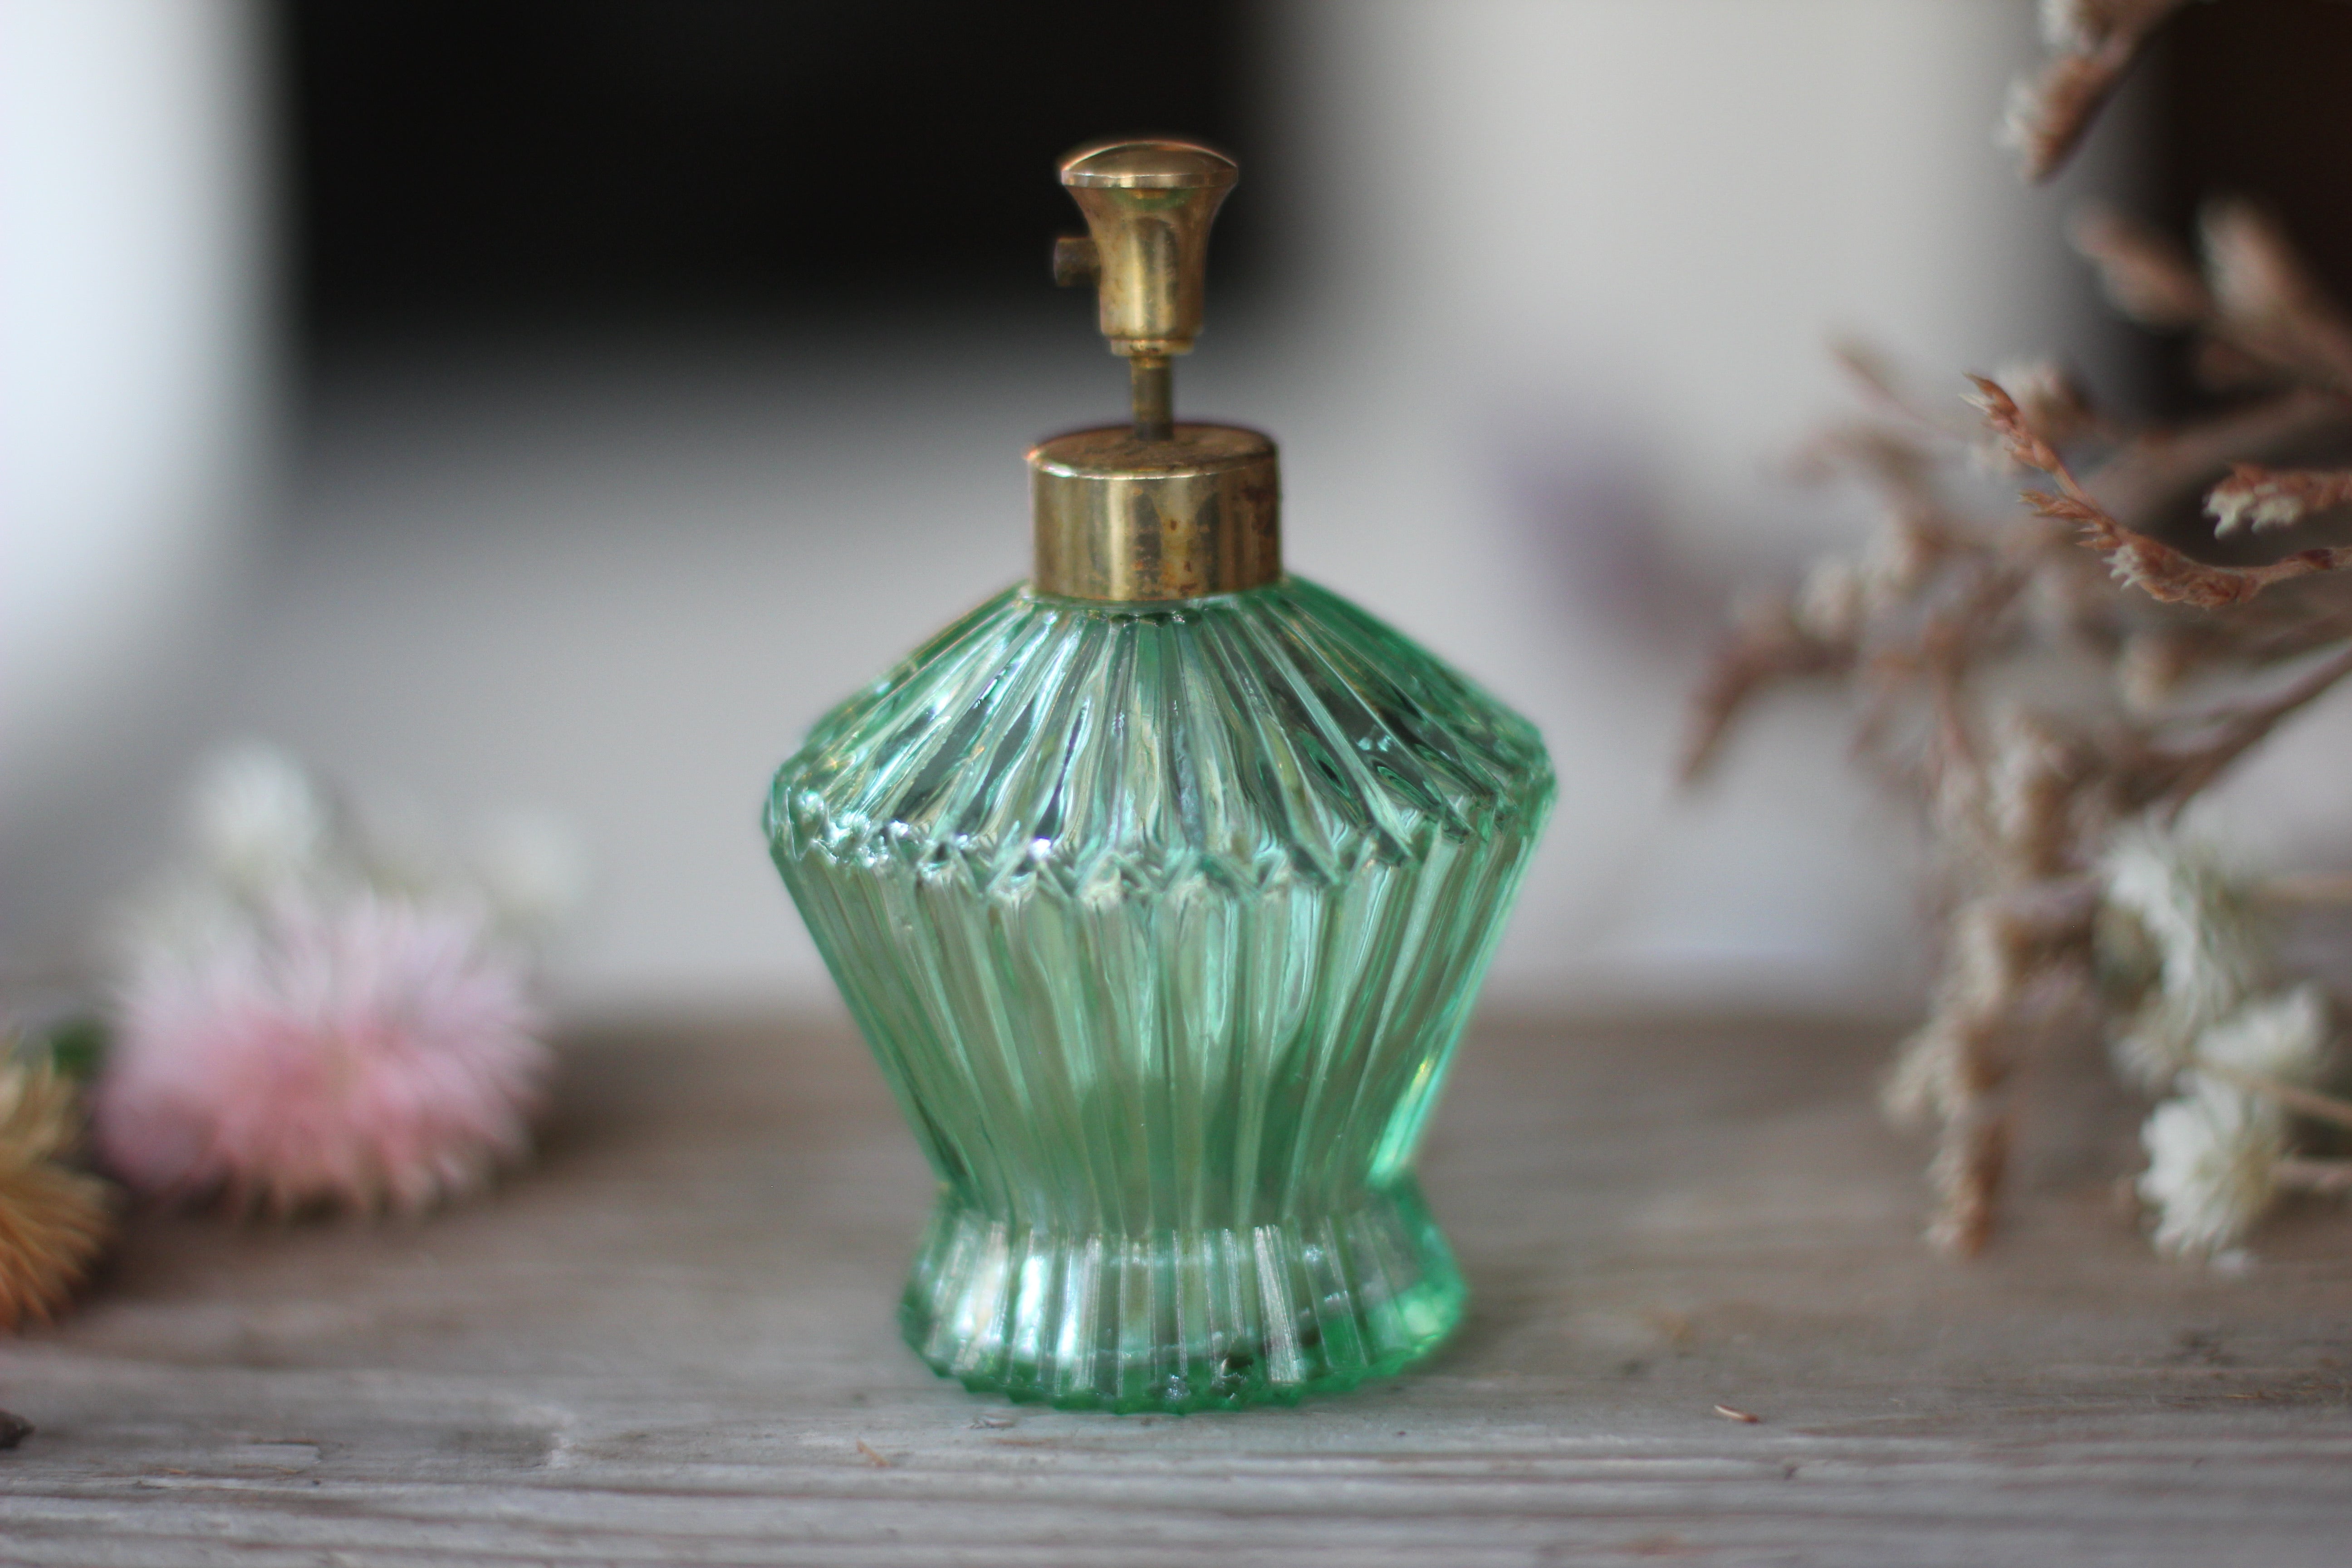 Collecting Perfume Bottles - Rare Bird Antiques